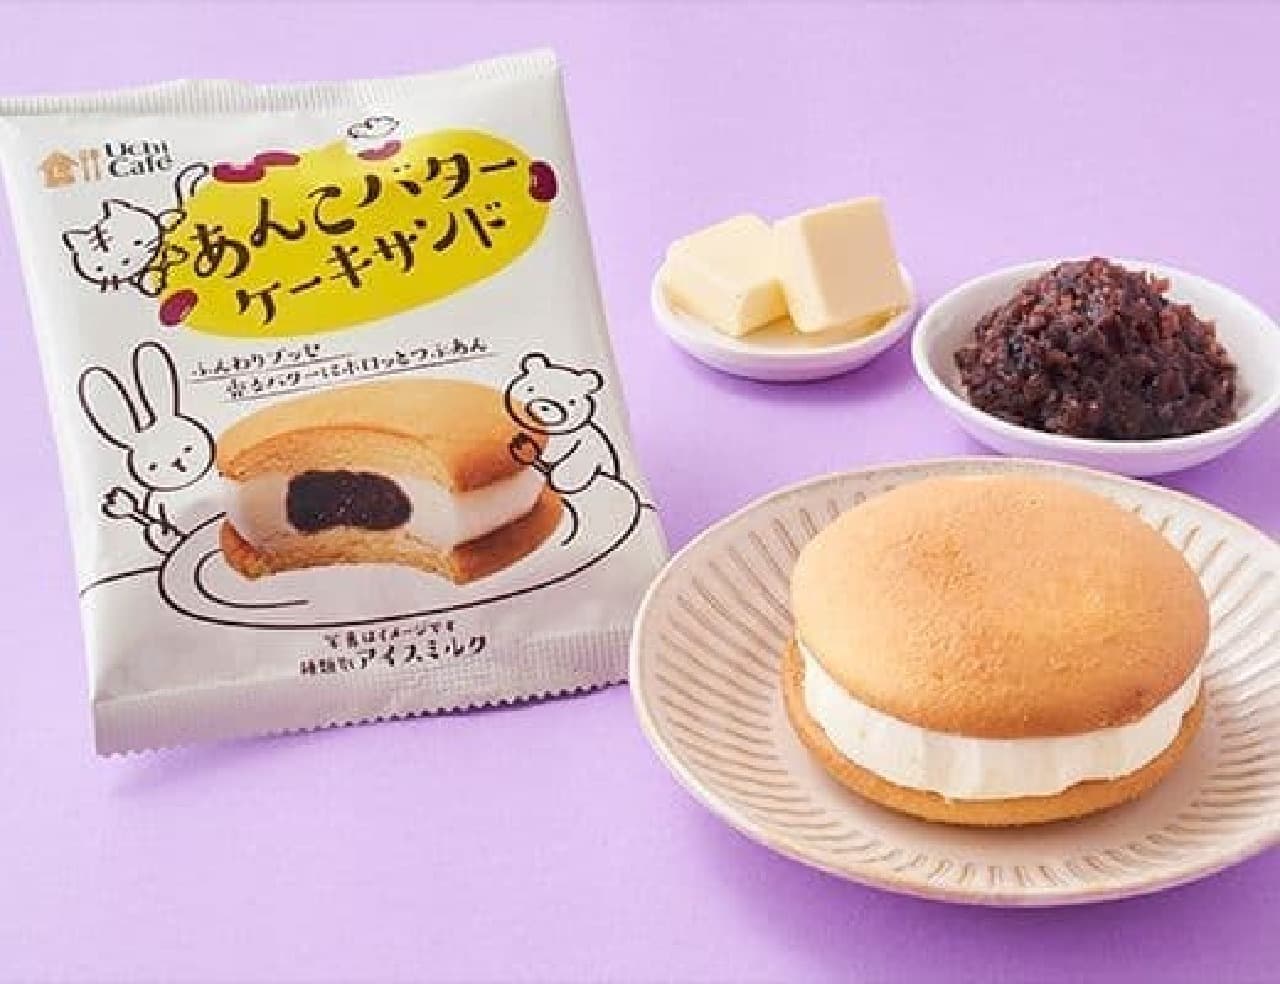 Lawson "Uchi Cafe Anko Butter Cake Sandwich 60ml"